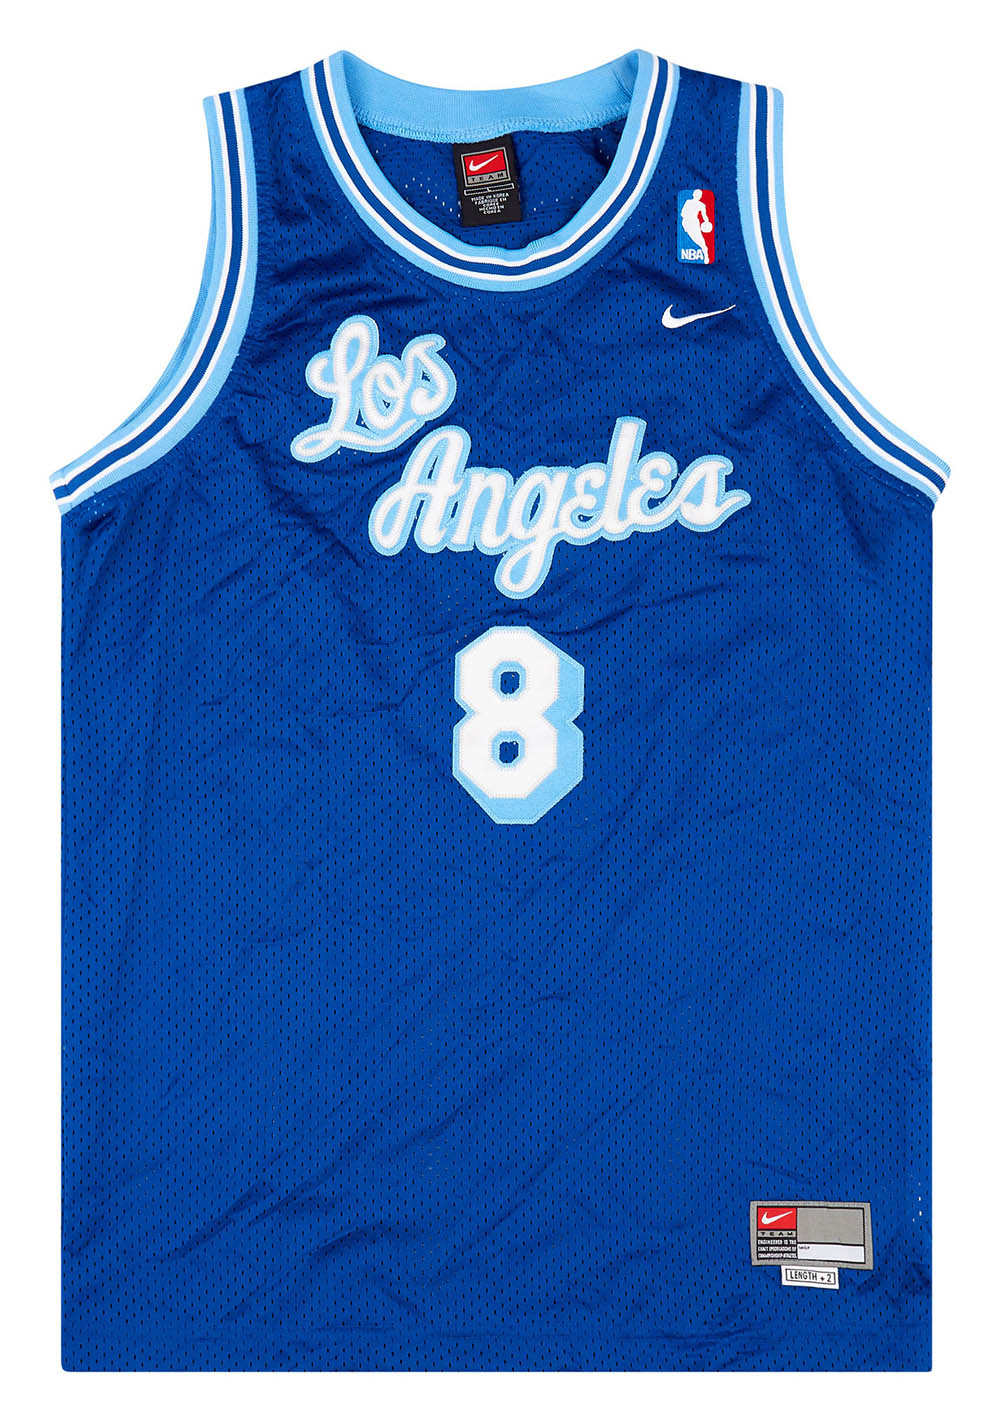 Vintage Los Angeles Lakers Kobe Bryant Swingman Jersey by Nike Size XXL Blue